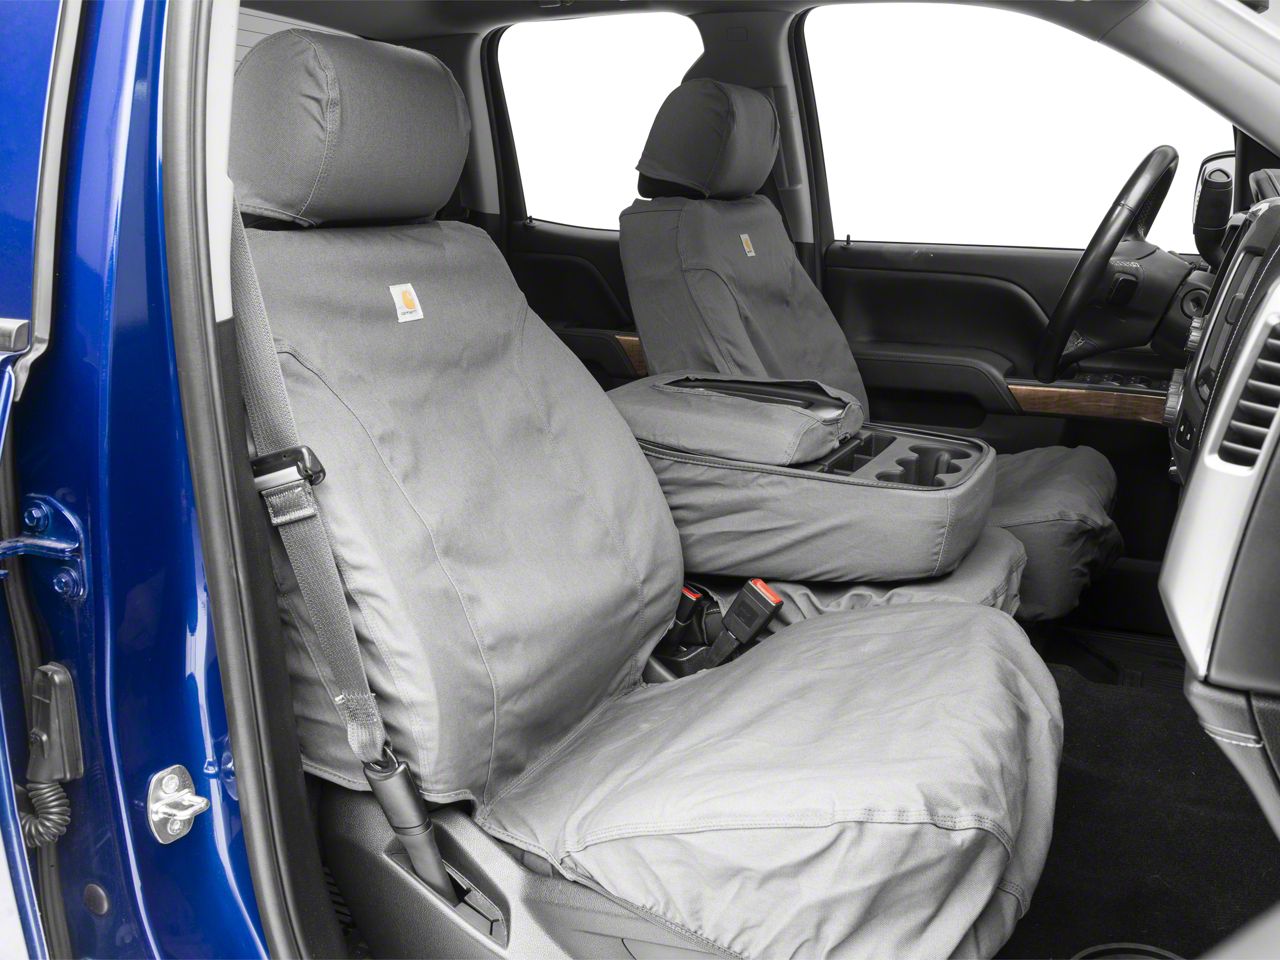 Covercraft Silverado Carhartt Seat Saver Front Covers Gravel S103818 14 18 1500 W Bench - 08 Silverado Carhartt Seat Covers